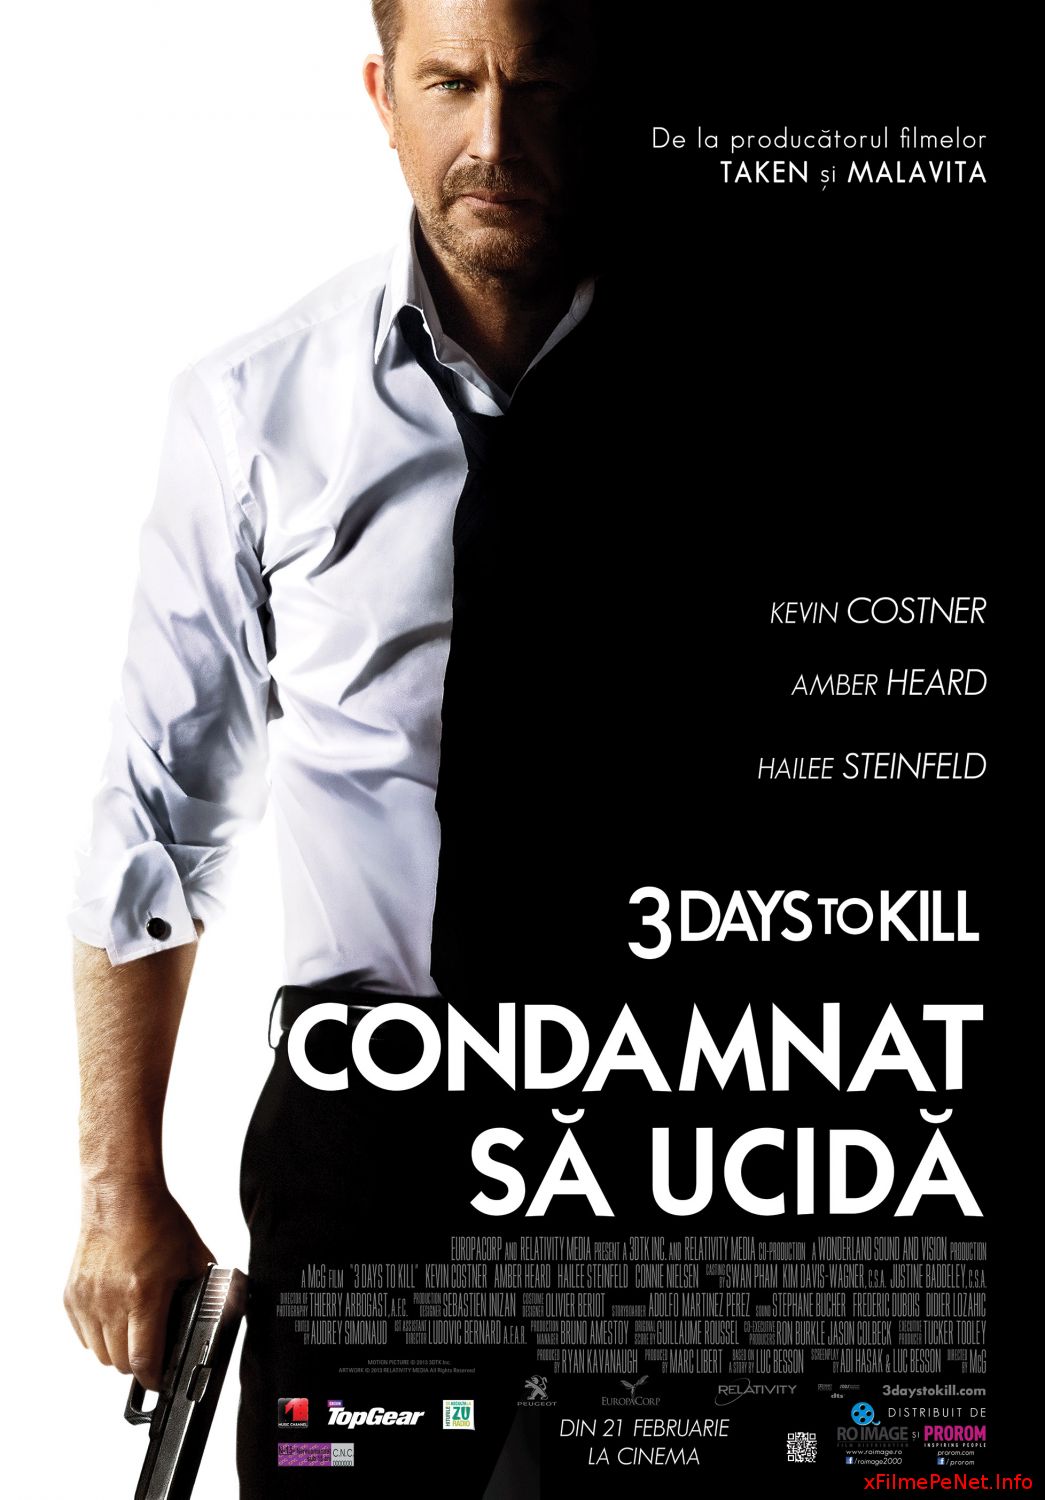 3 Days to Kill - Condamnat să ucidă (2014) Online Subtitrat